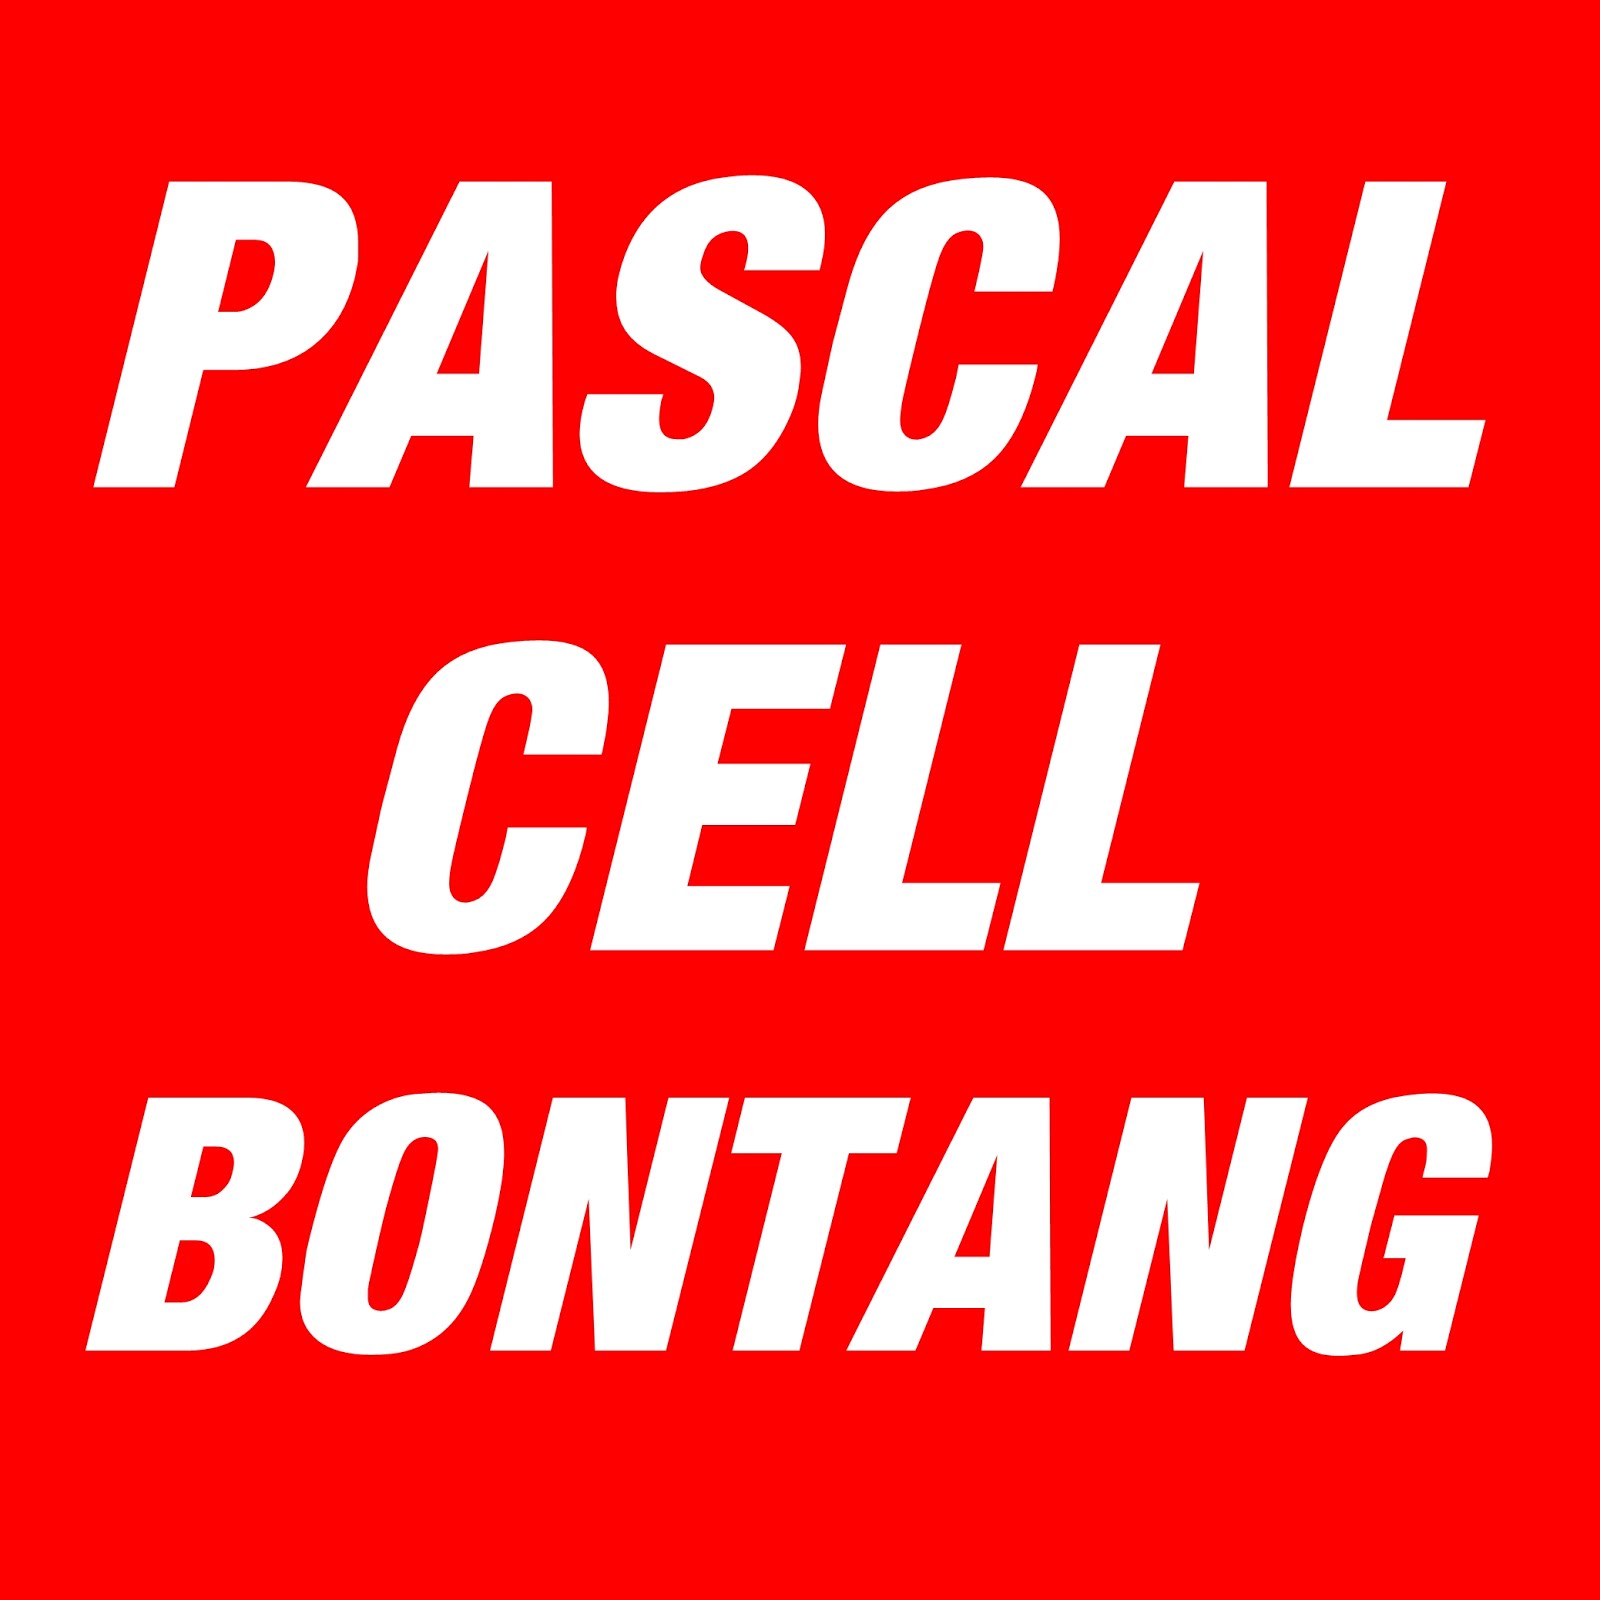 Pascal Cell Bontang